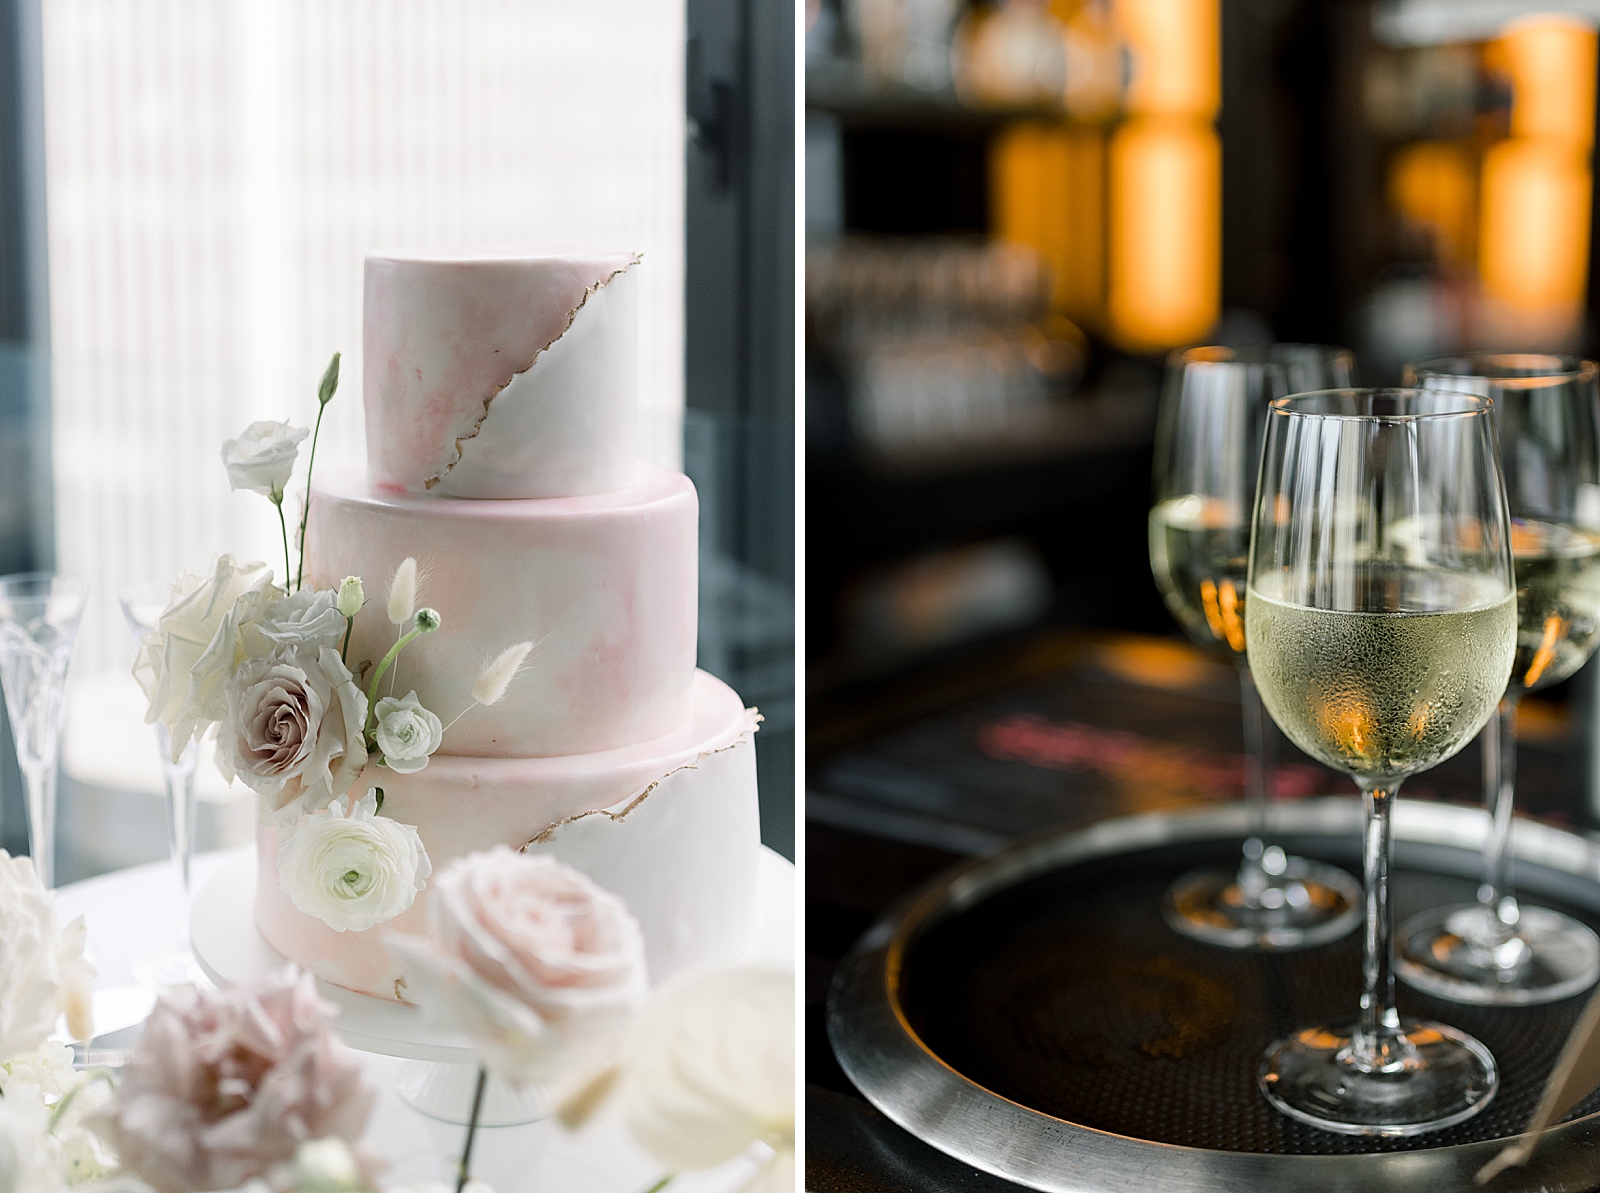 Detail shot of white 3 tier wedding cake and white wine glasses